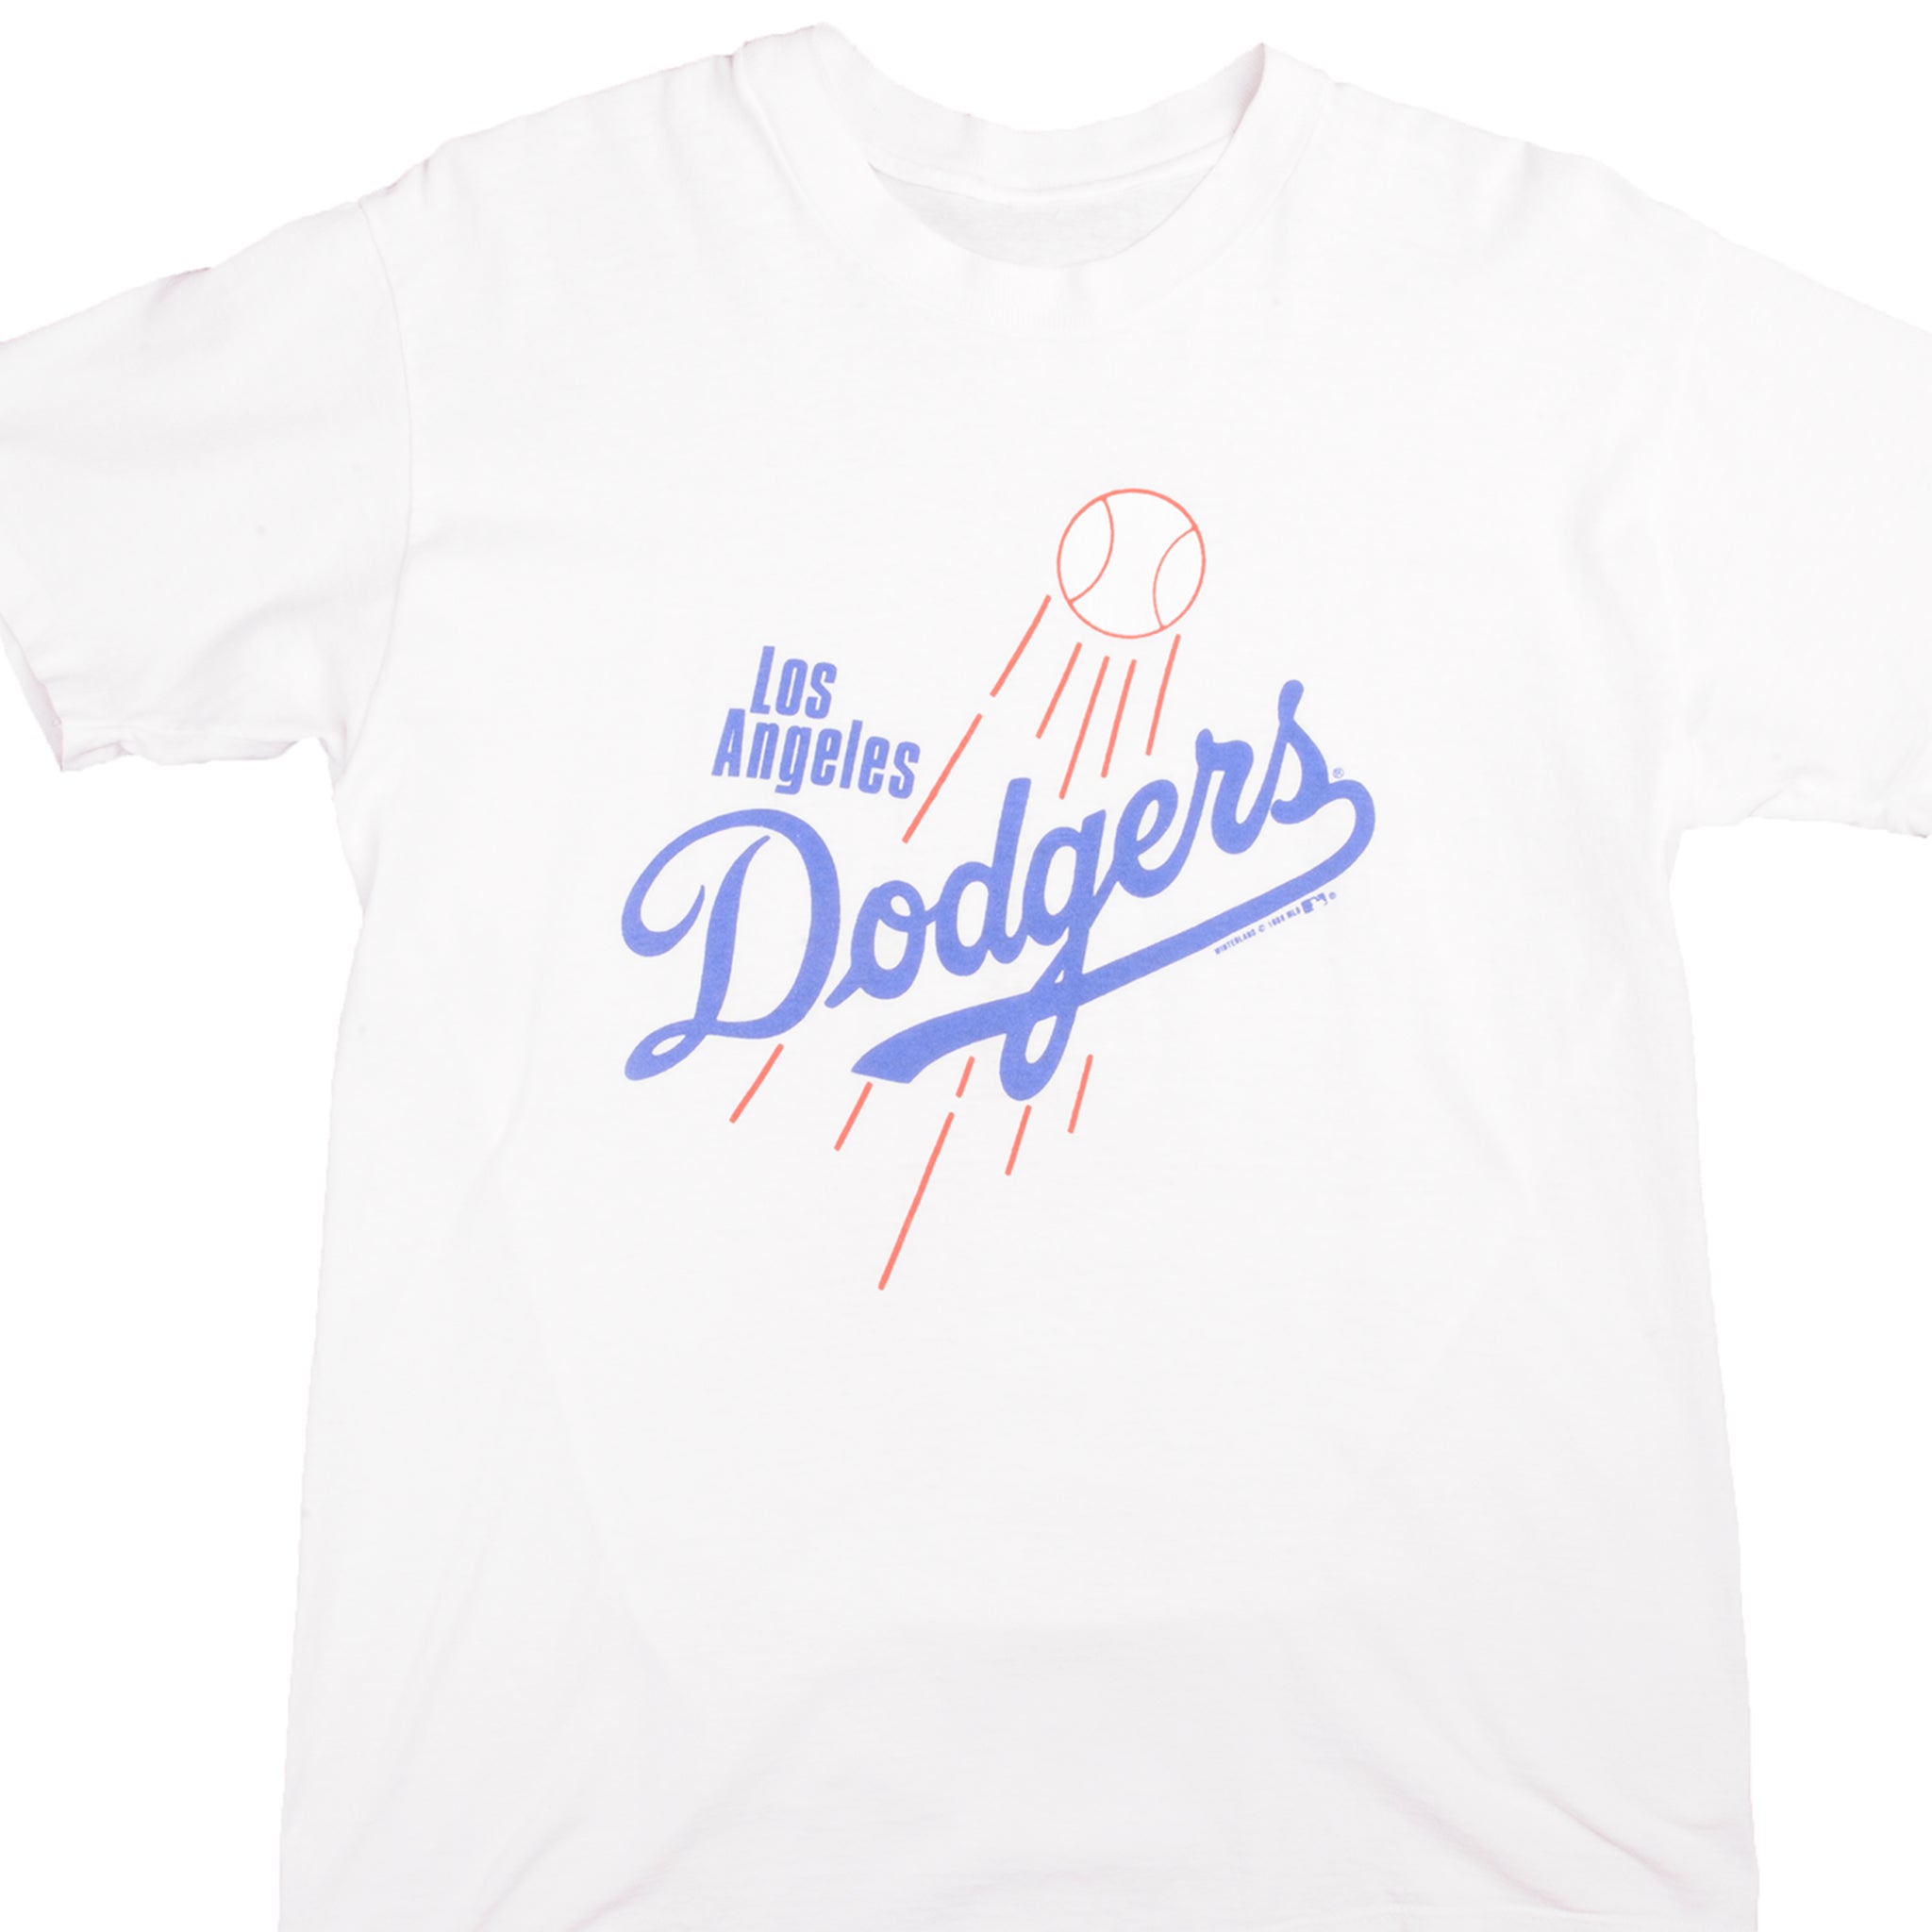 Los Angeles Dodgers Tee